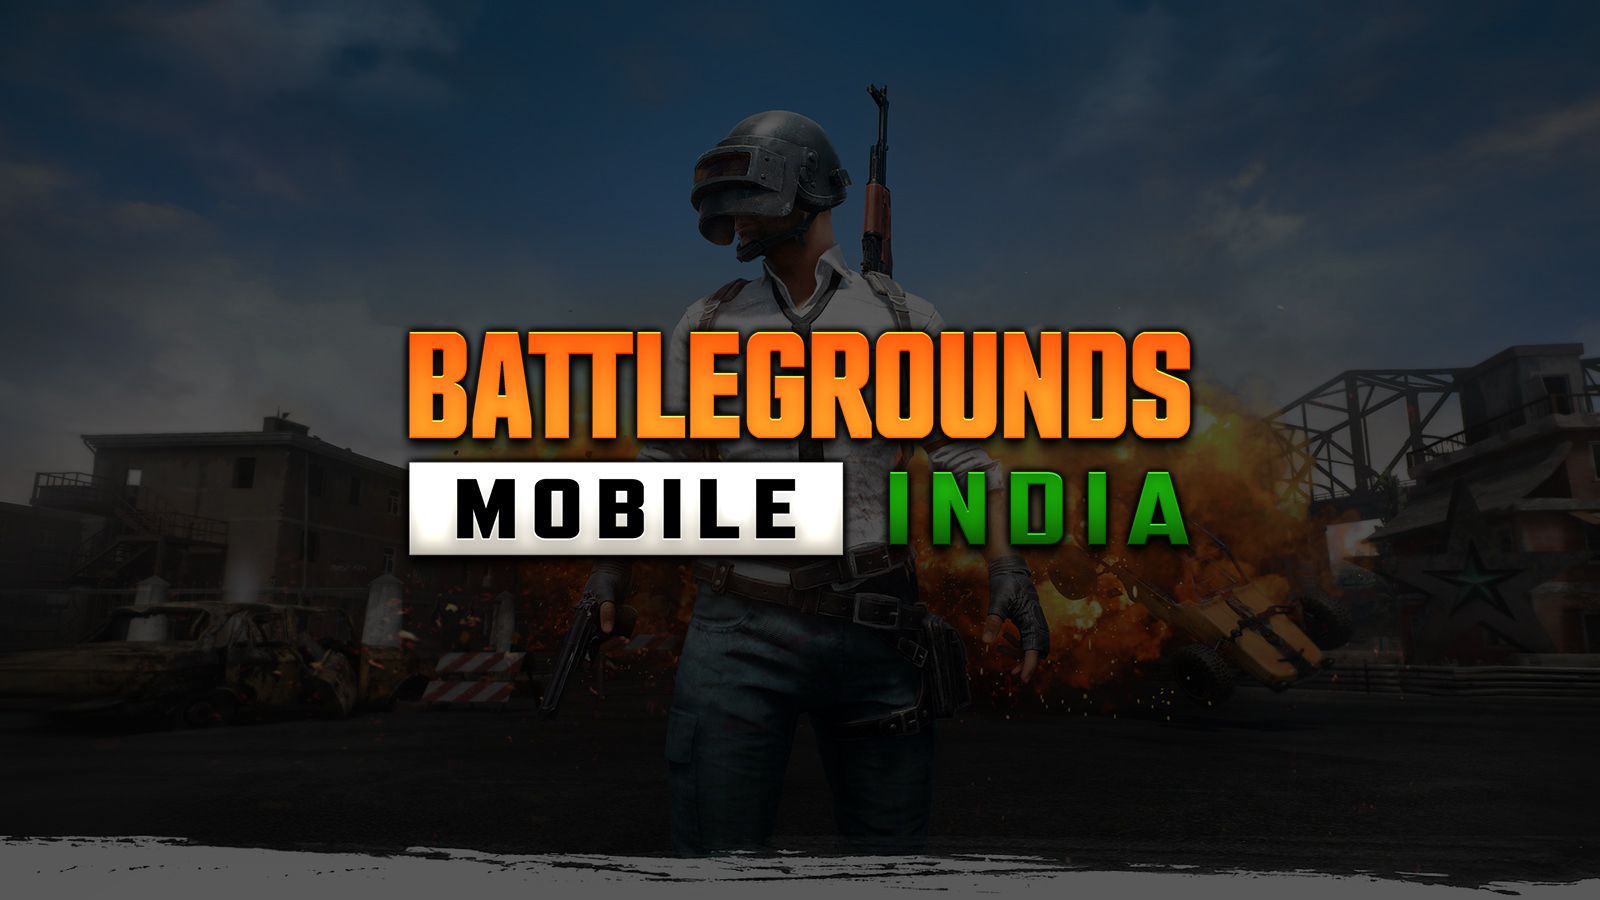 Battleground Mobile India Wallpaper Transparent Background Free Download -  PNG Images